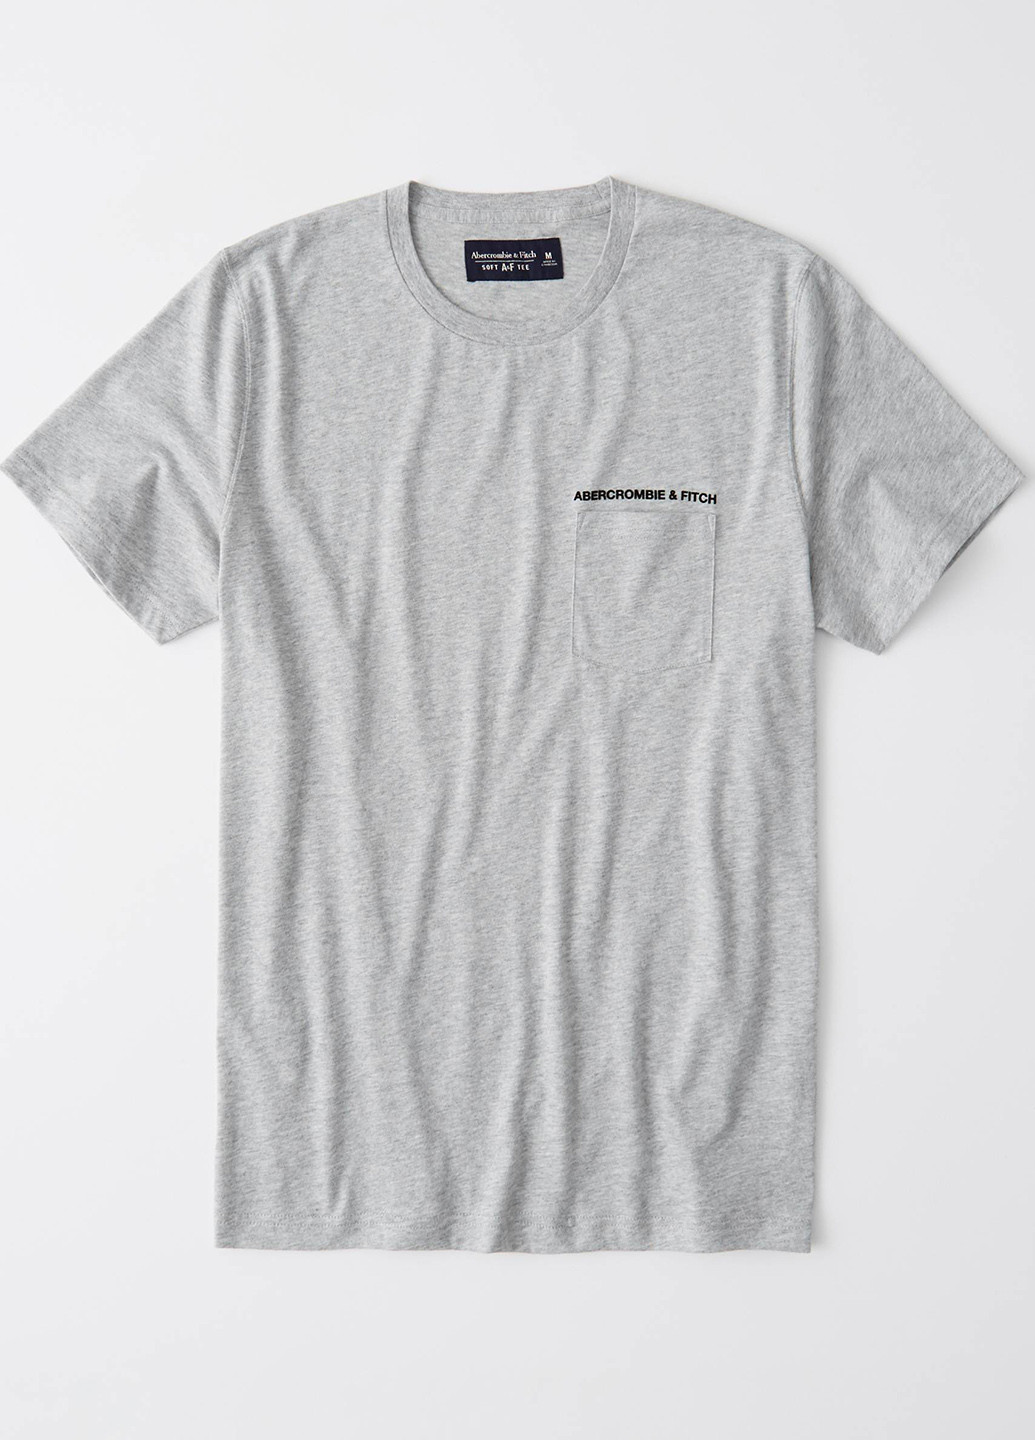 Сіра футболка Abercrombie & Fitch